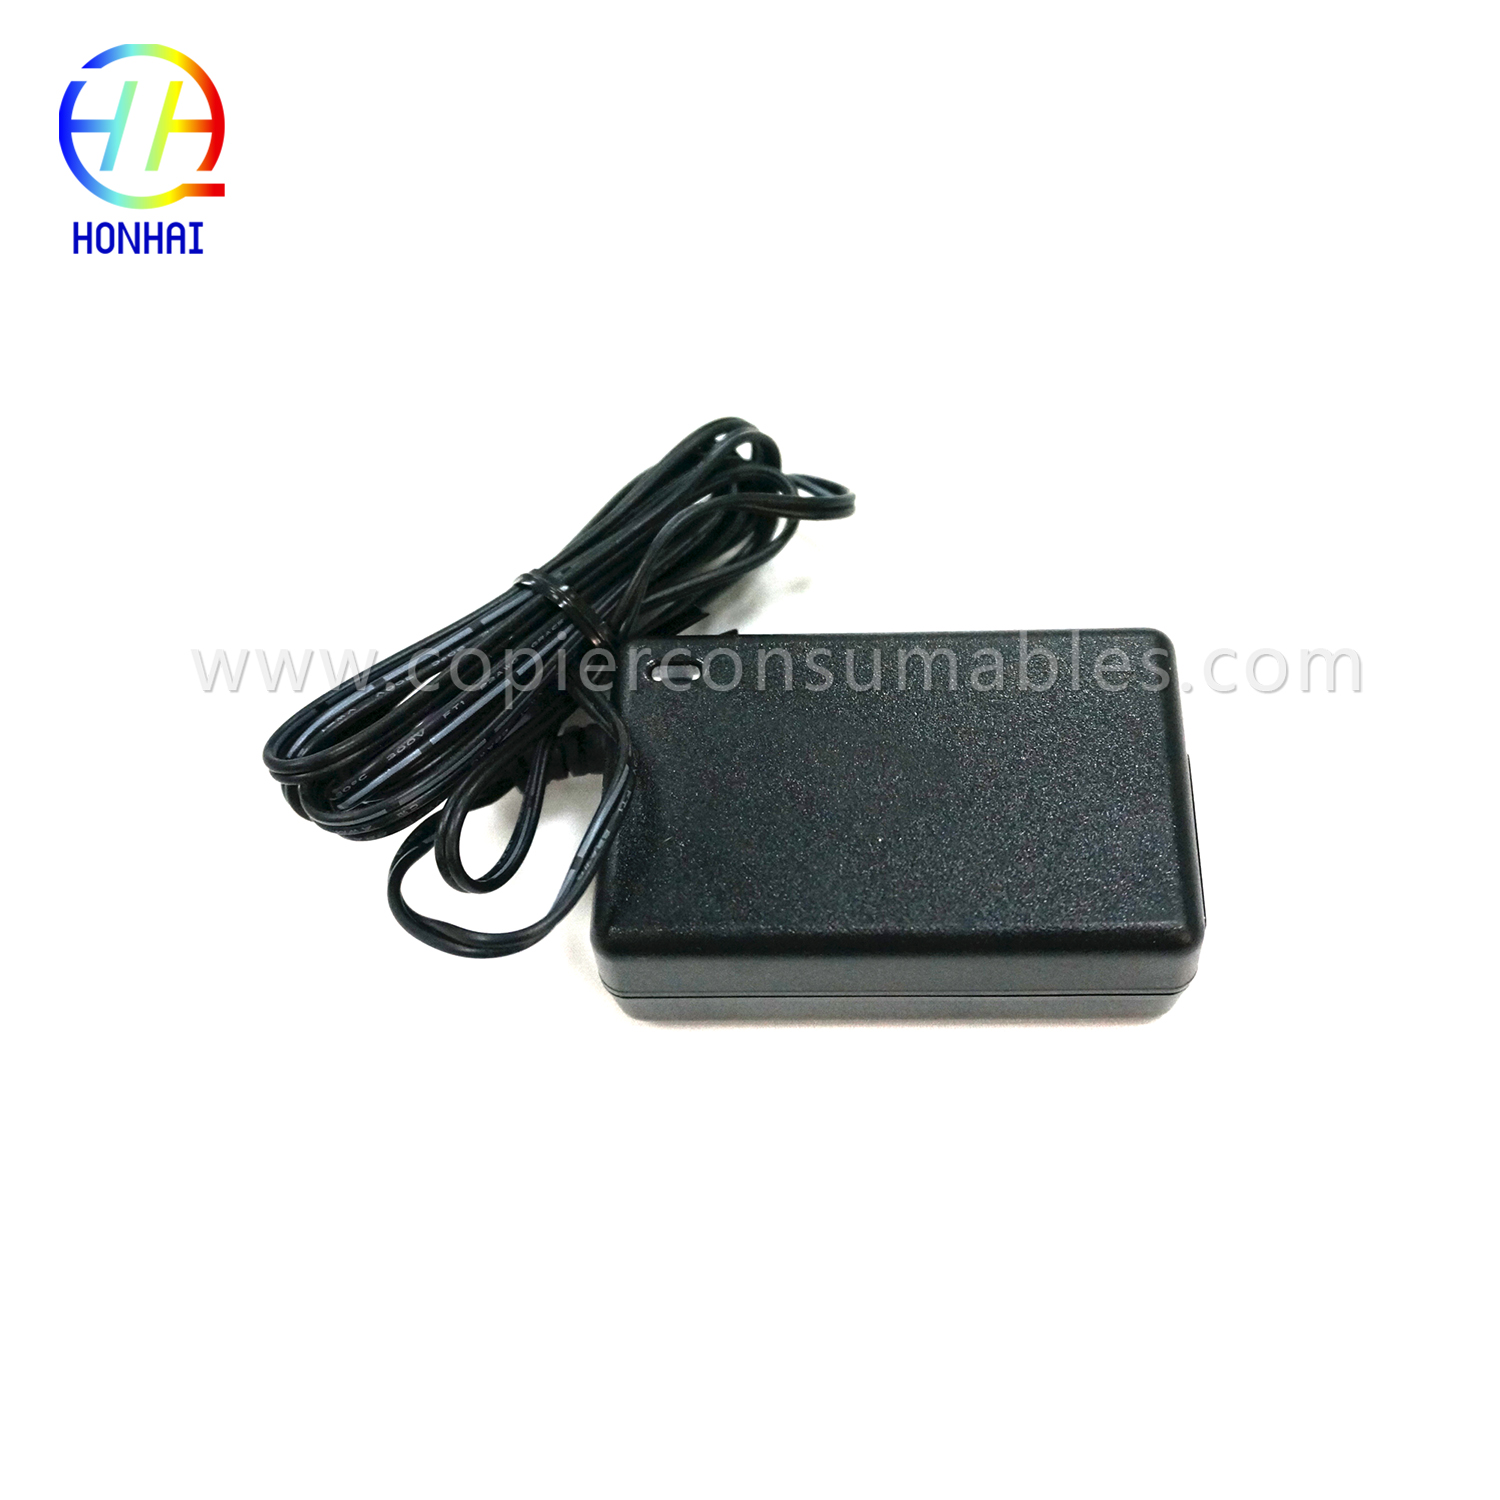 AC Power Adapter Charger HP Deskjet 1000 1050 2000 2050 2060 2010 0957-2286 30V 333mA (3)